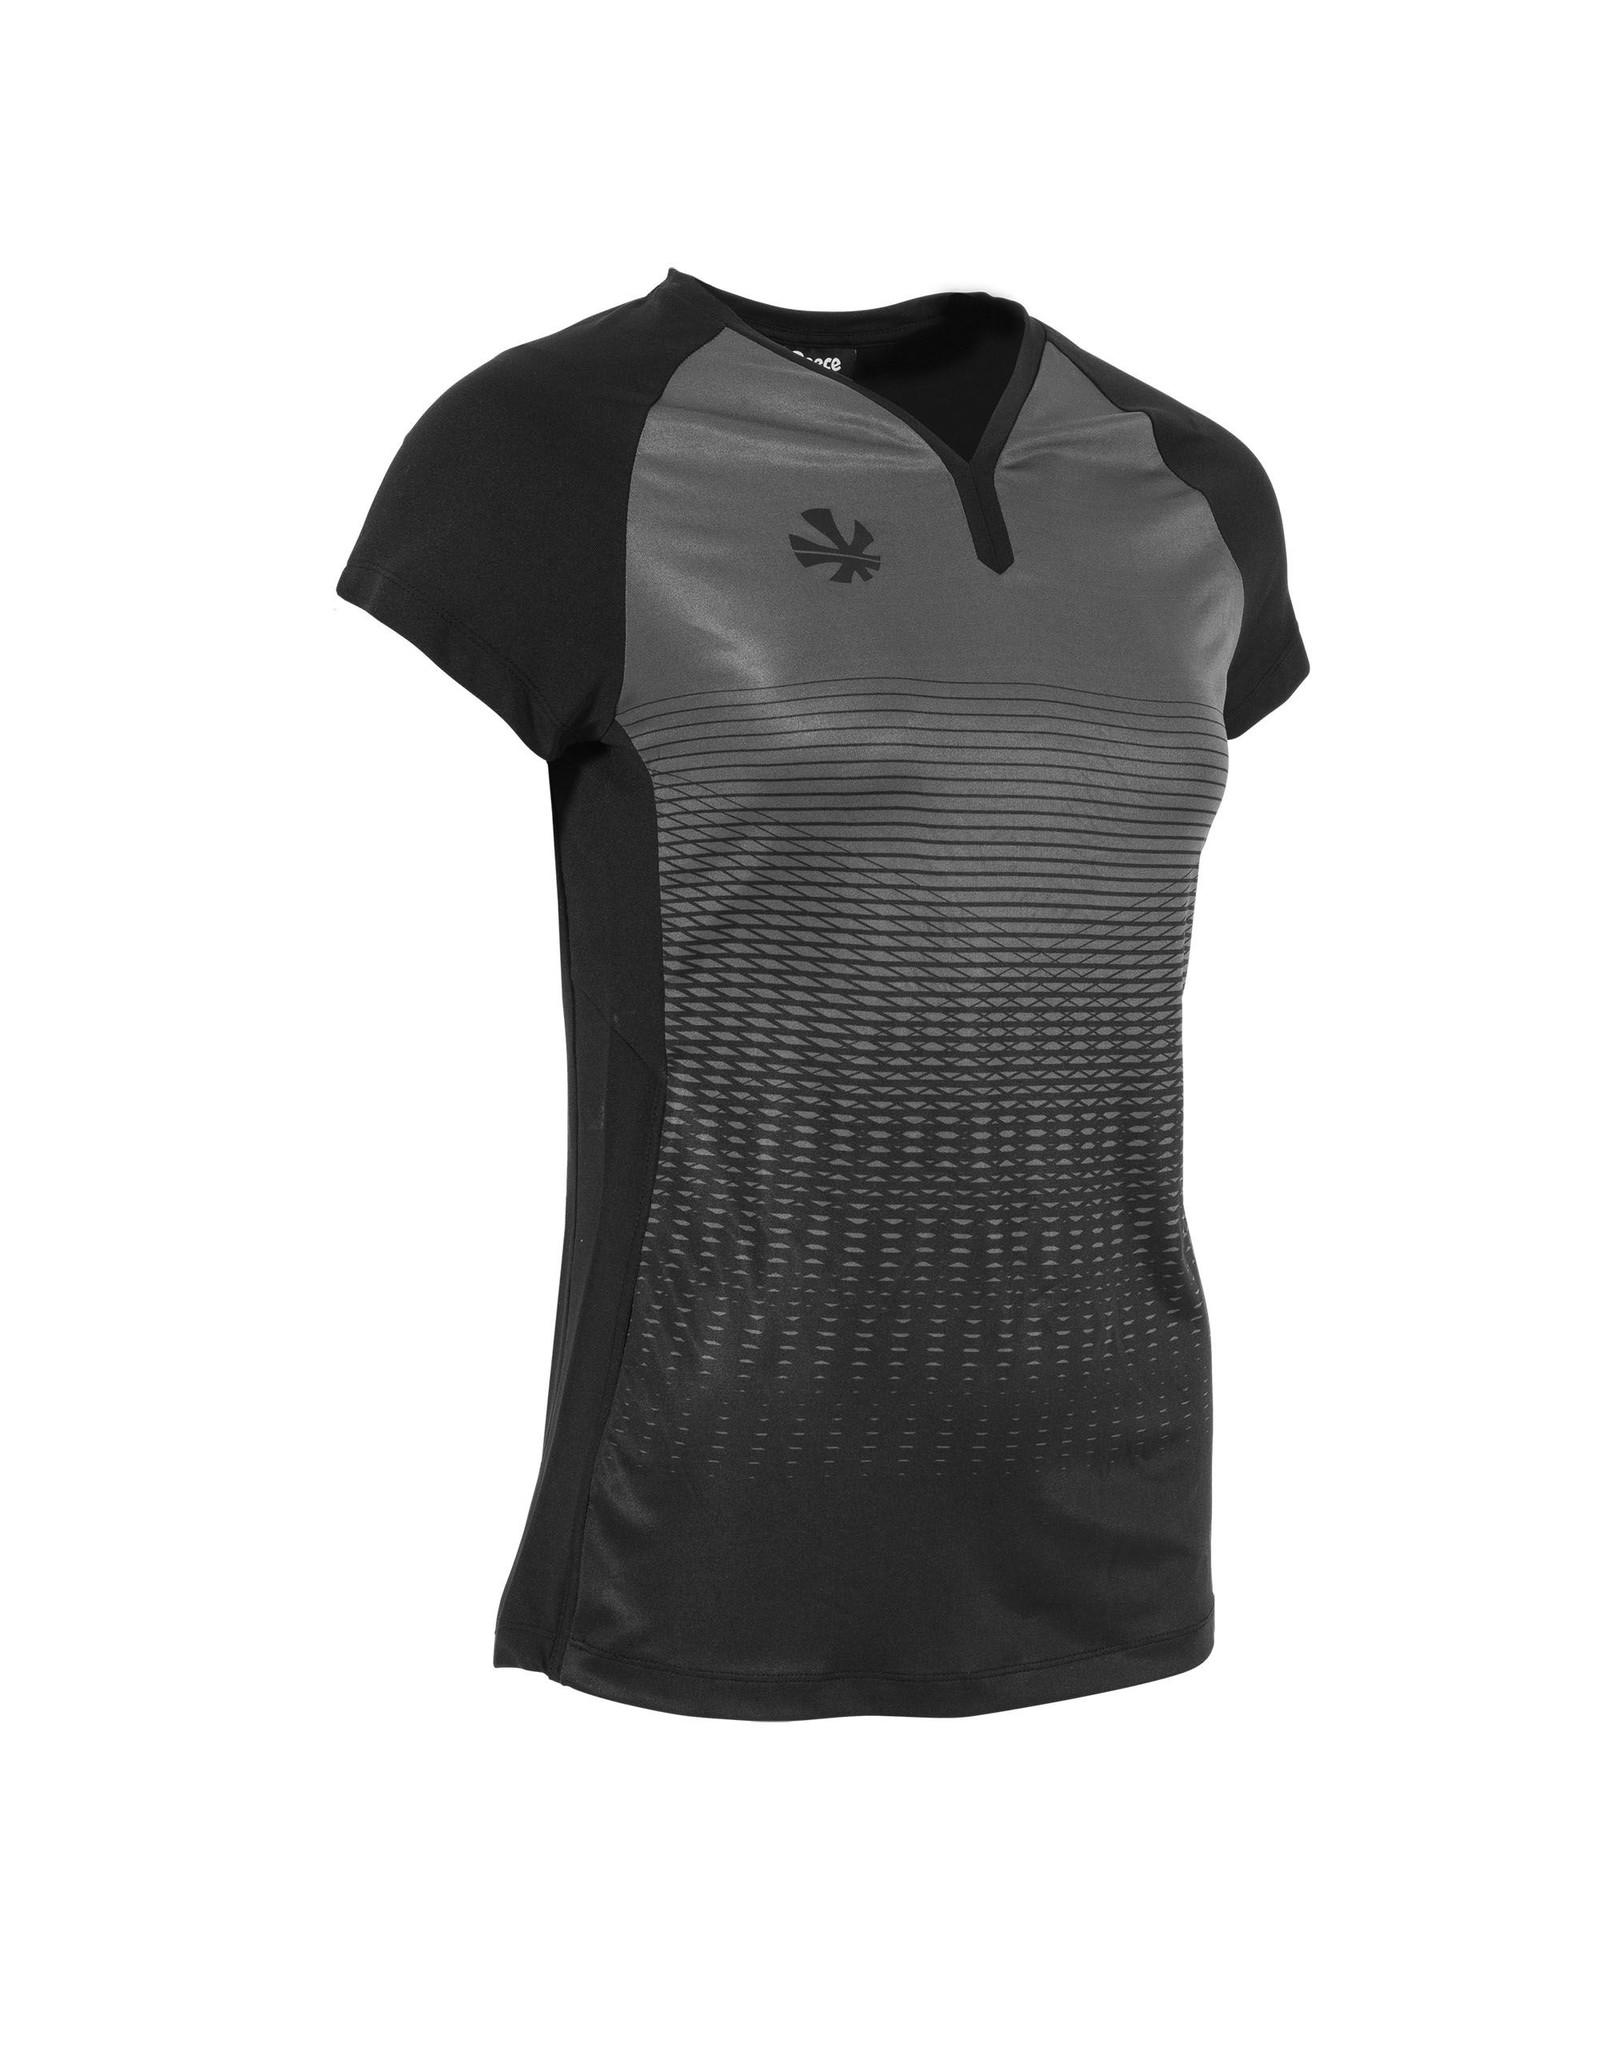 Reece Australia Racket Shirt Ladies-Black-Anthracite